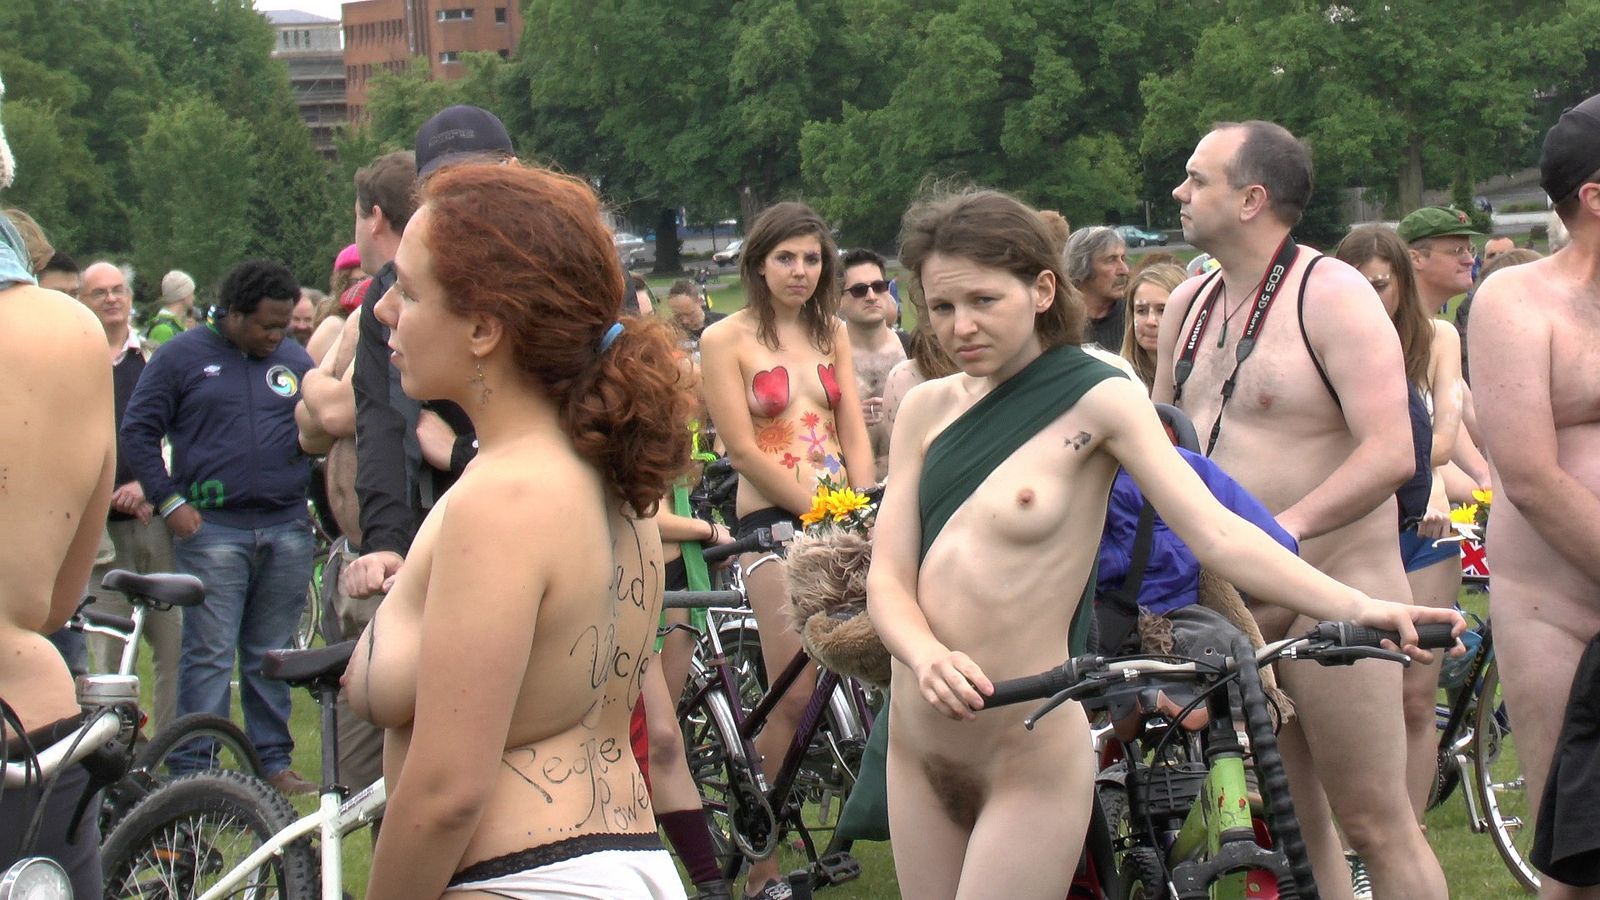 Bike naked ass funny